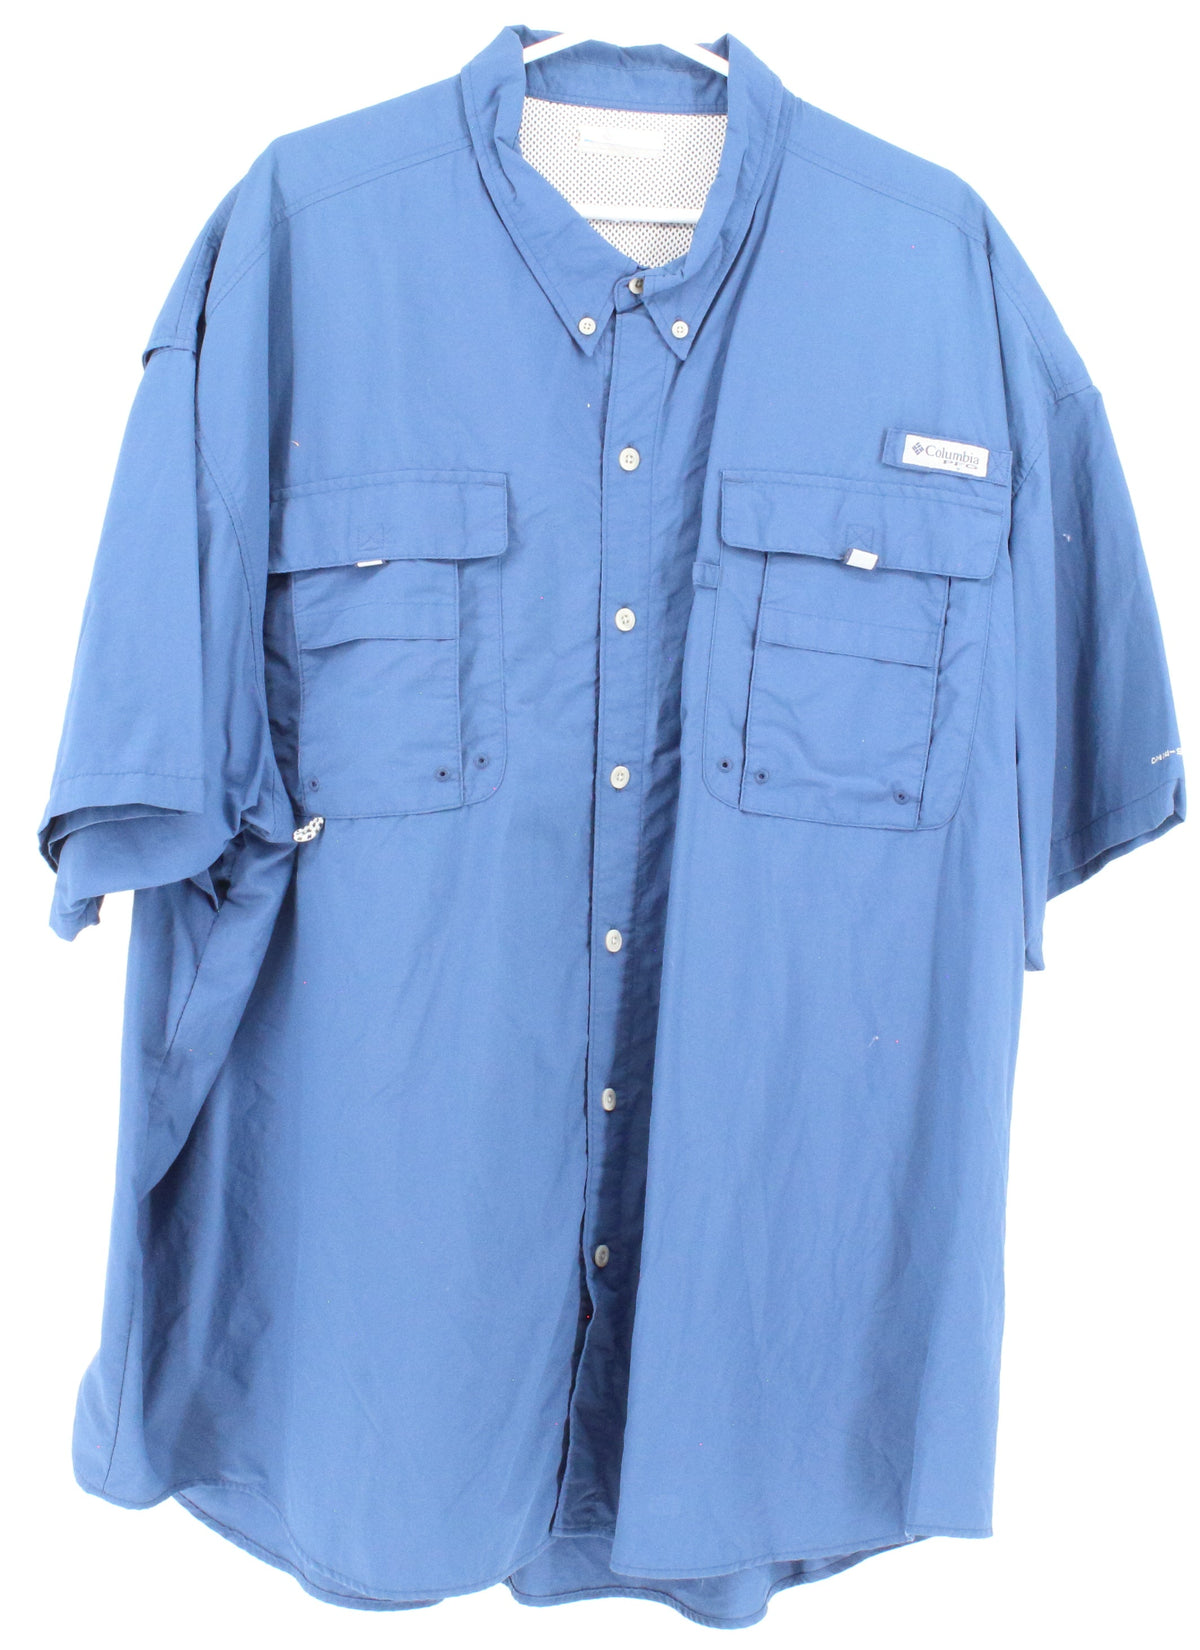 Columbia Sportswear Company Blue Button-Up Short Sleeve Shirt